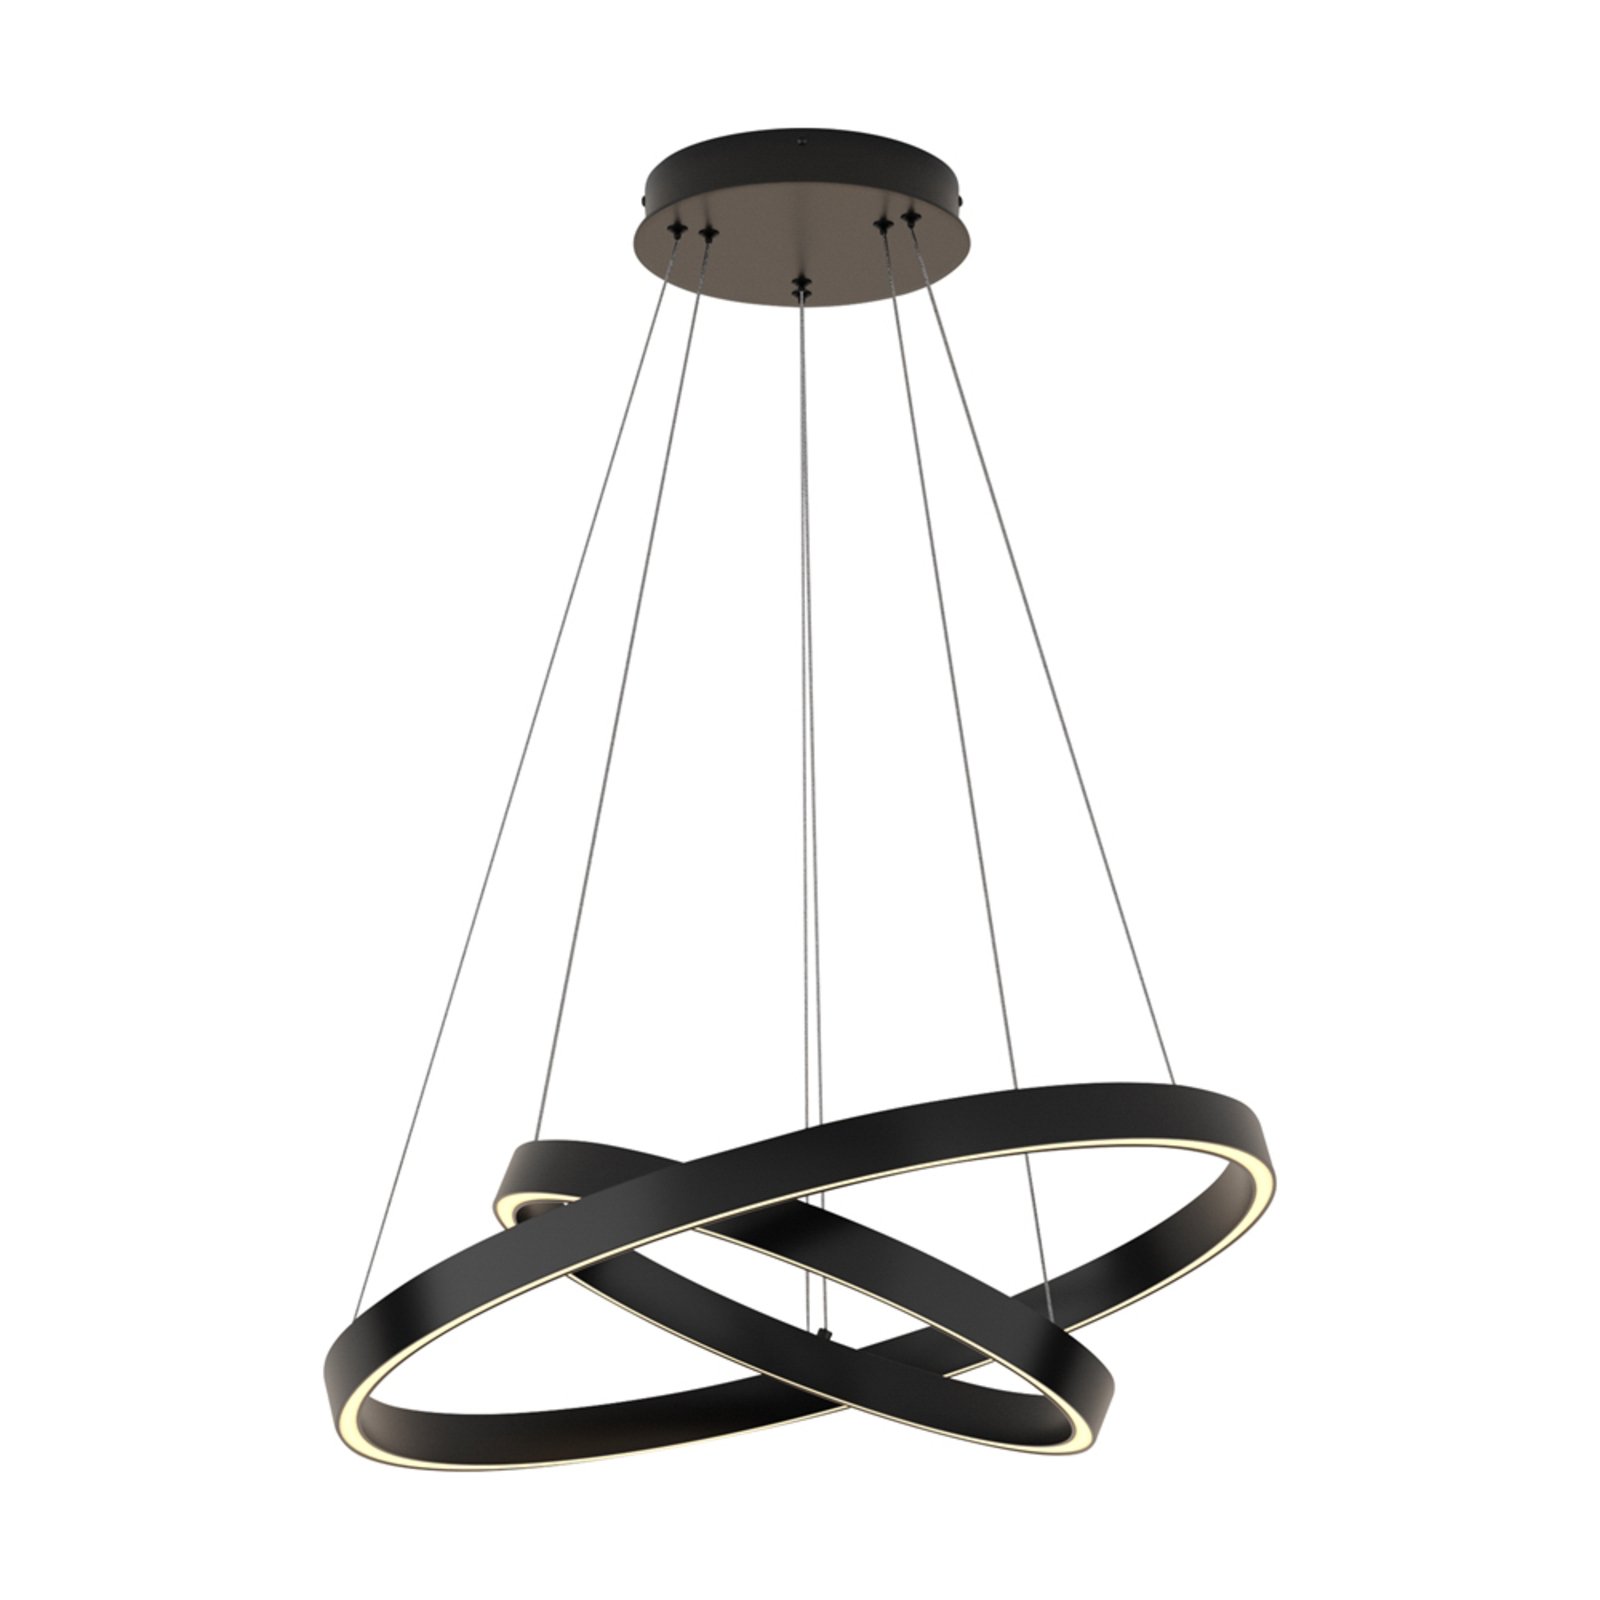 Maytoni Rim висяща лампа 830 2 пръстена Ø 60 cm черен